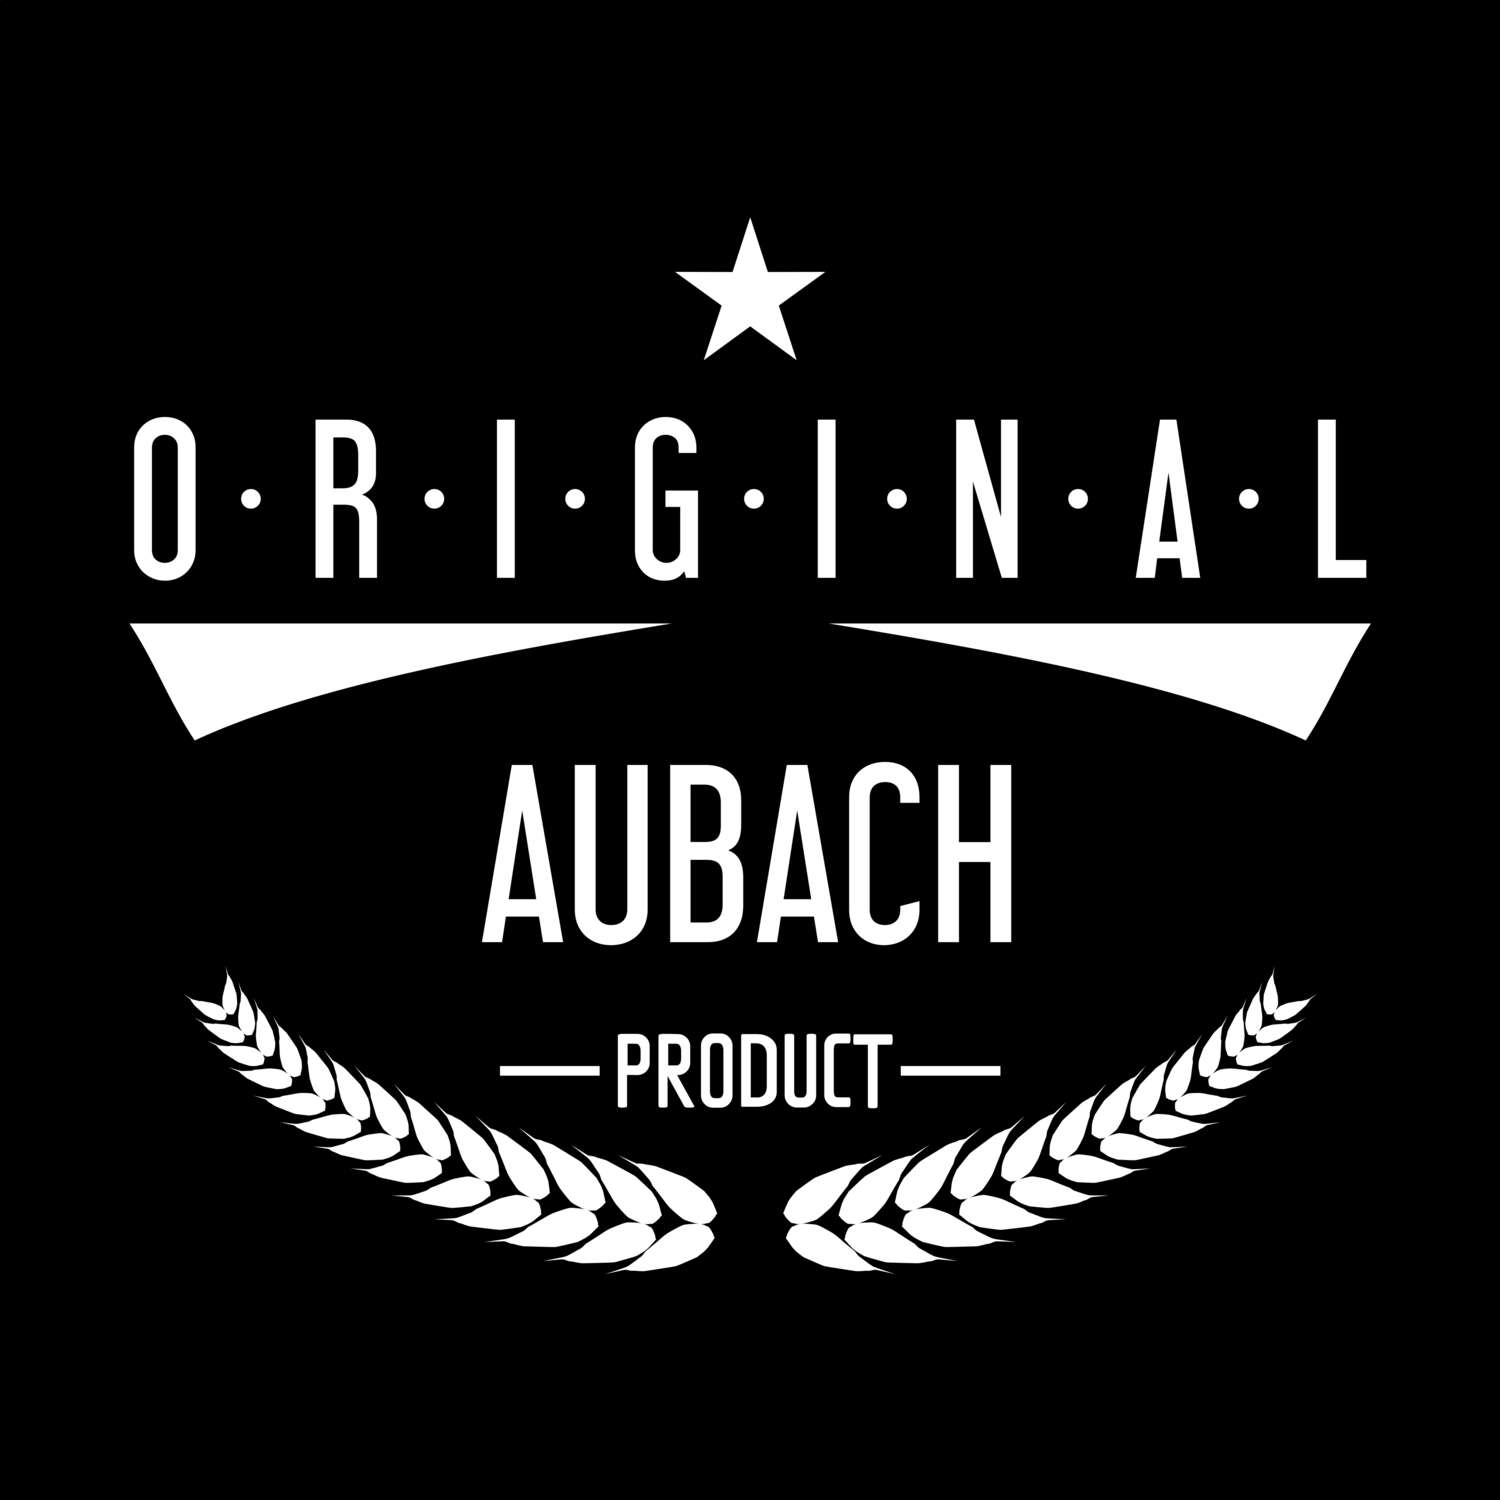 Aubach T-Shirt »Original Product«